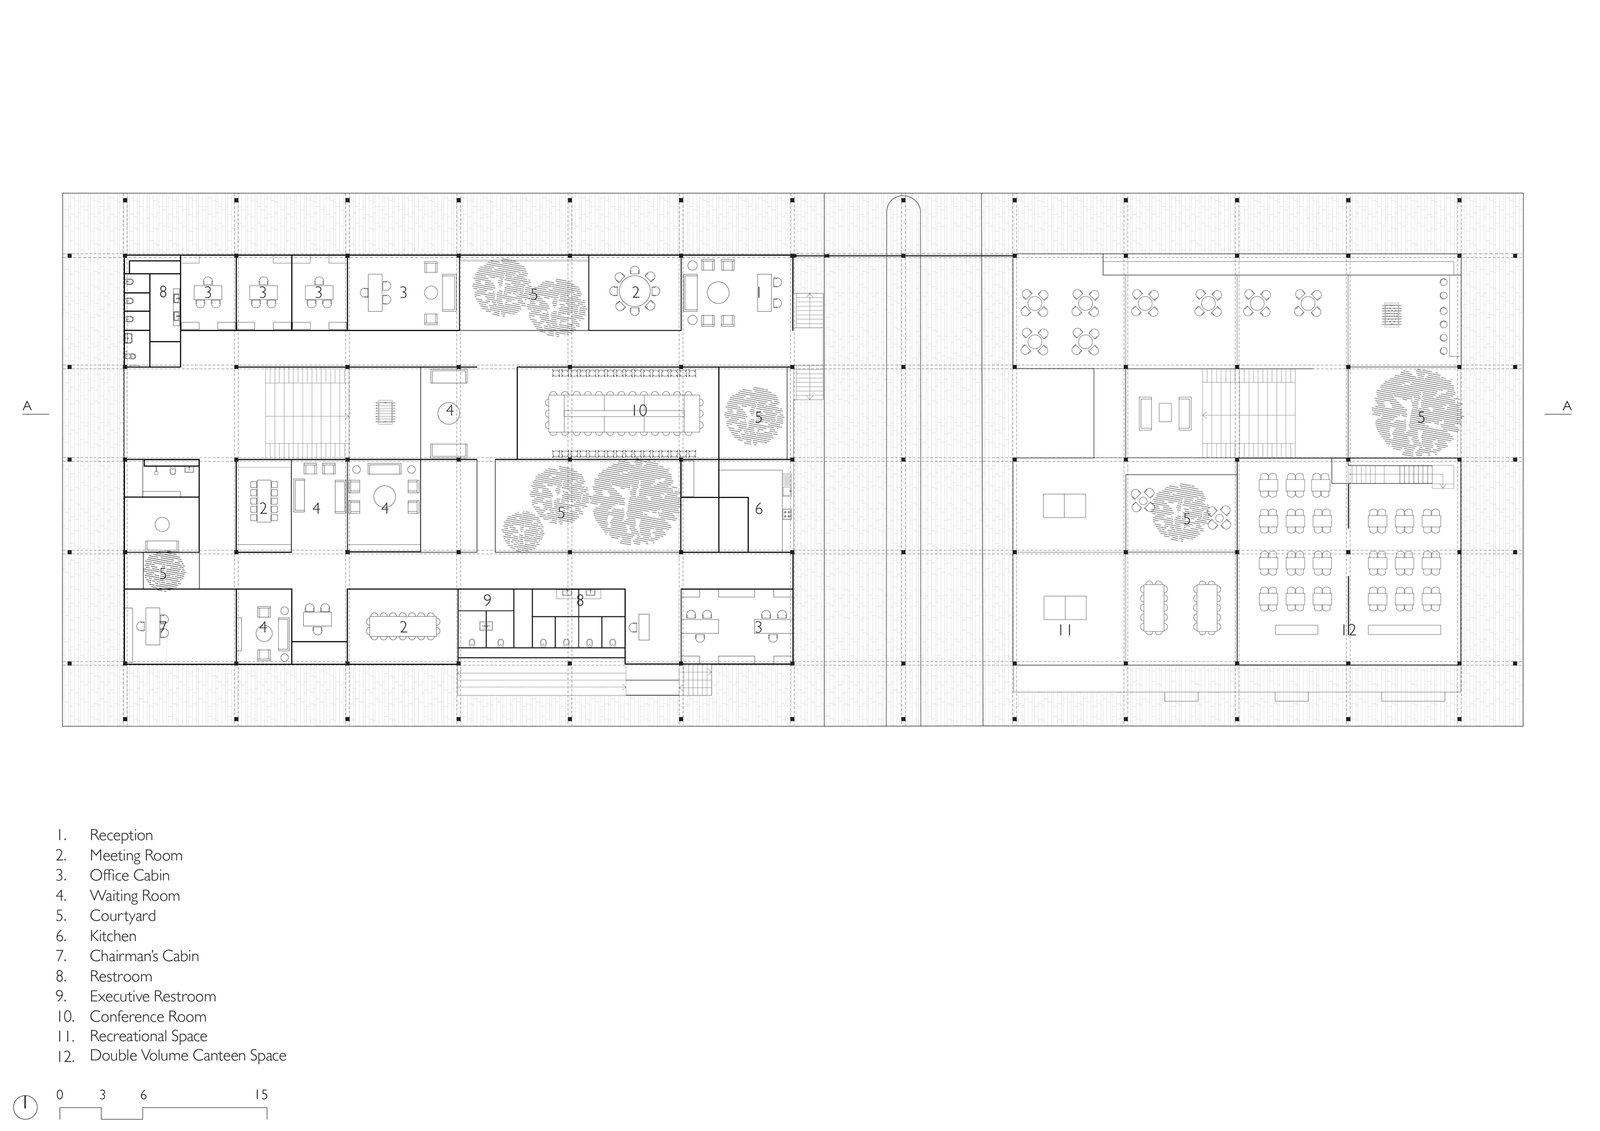 Upper Floor Plan of Administration Building in Latur, India